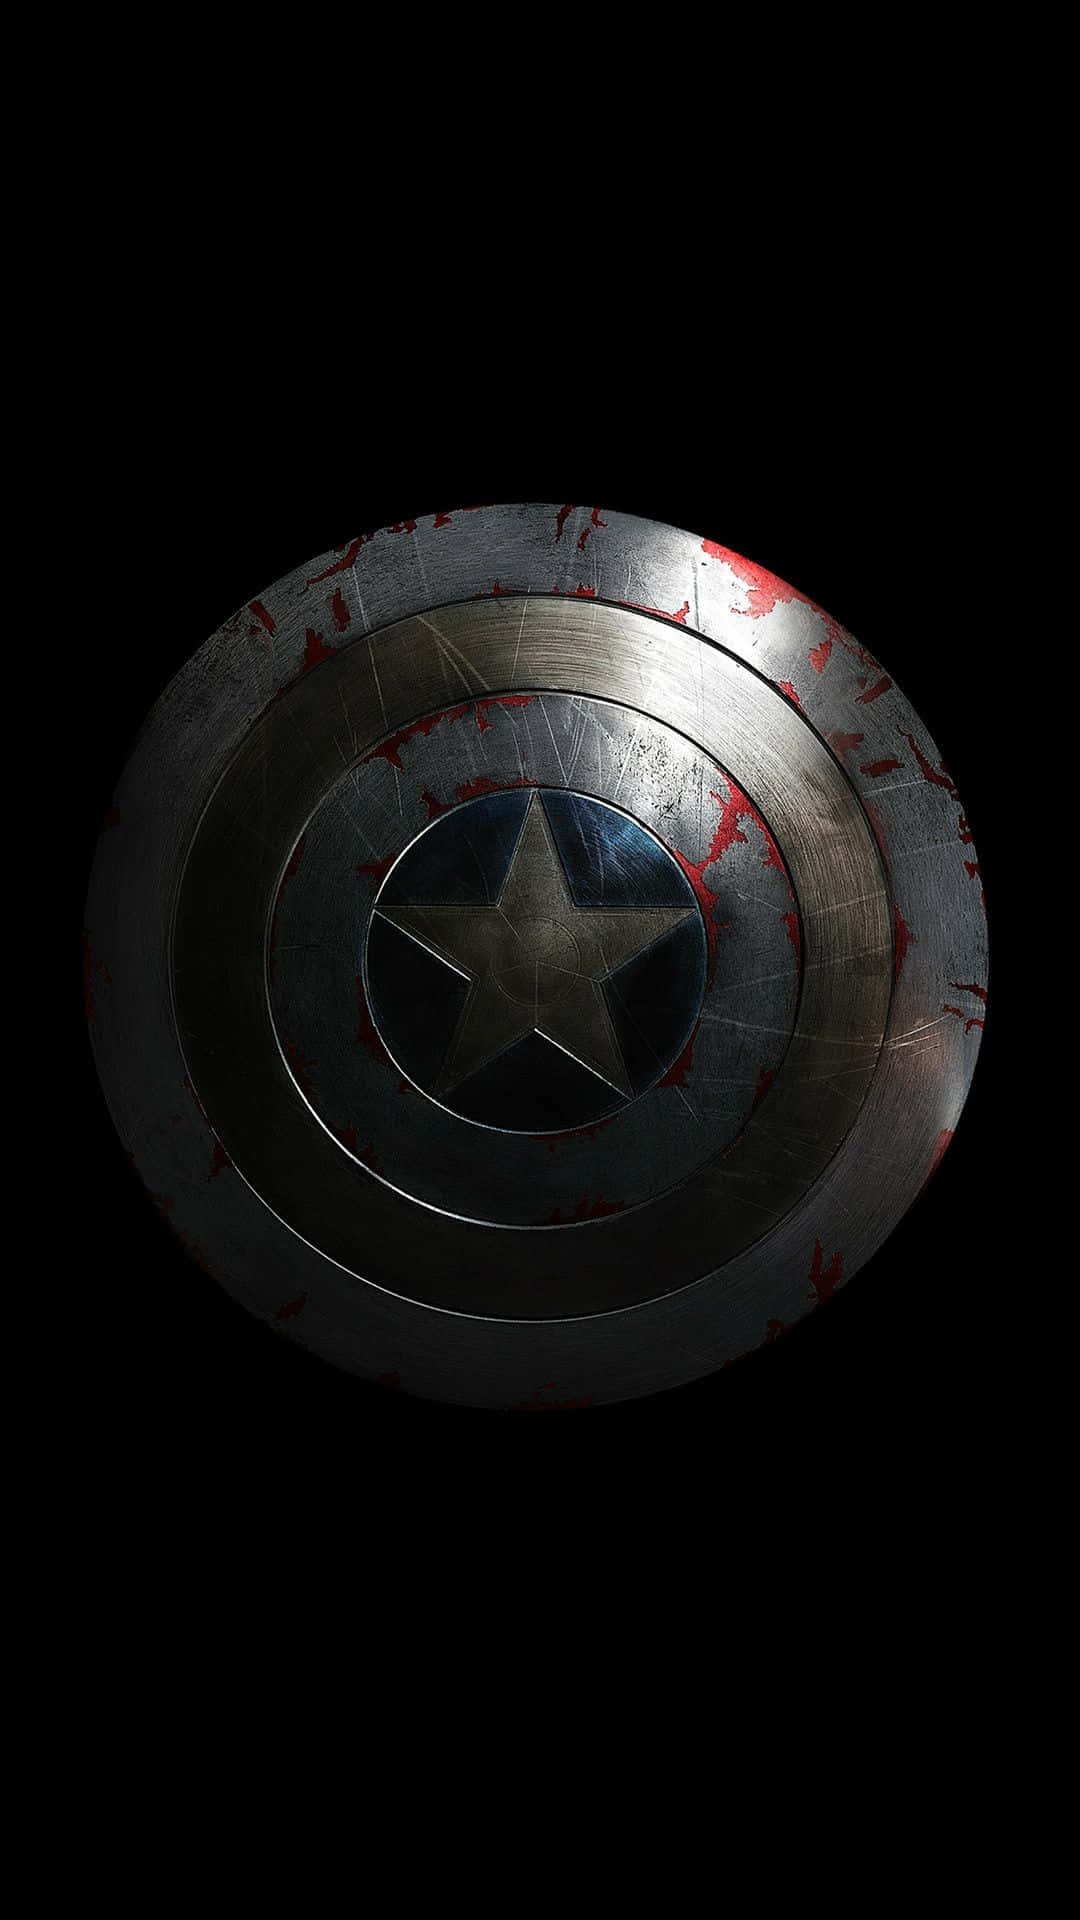 Captain America Shield Dark Background Wallpaper